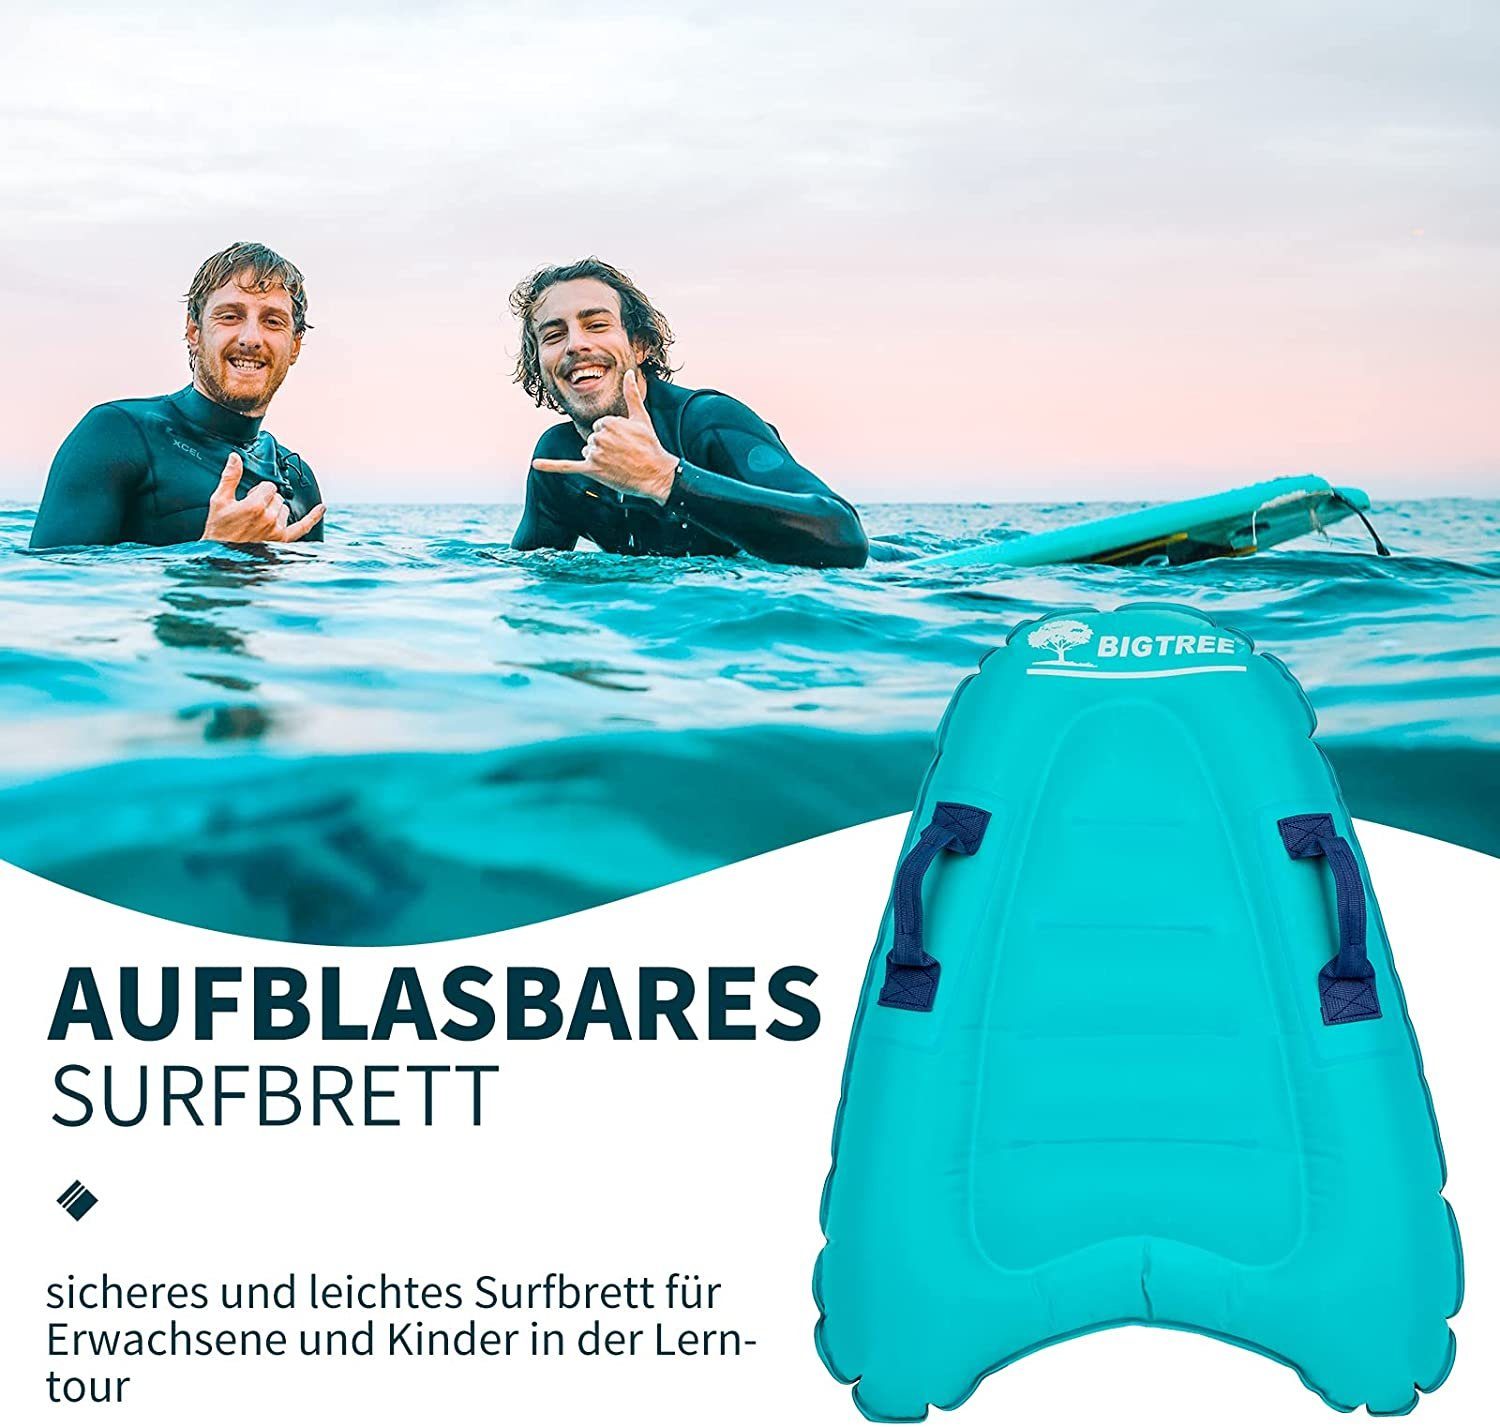 Schwimmhilfe Pure Bodyboard, 52x14x70cm, Inflatable SUP-Board Aufblasbares KAHOO